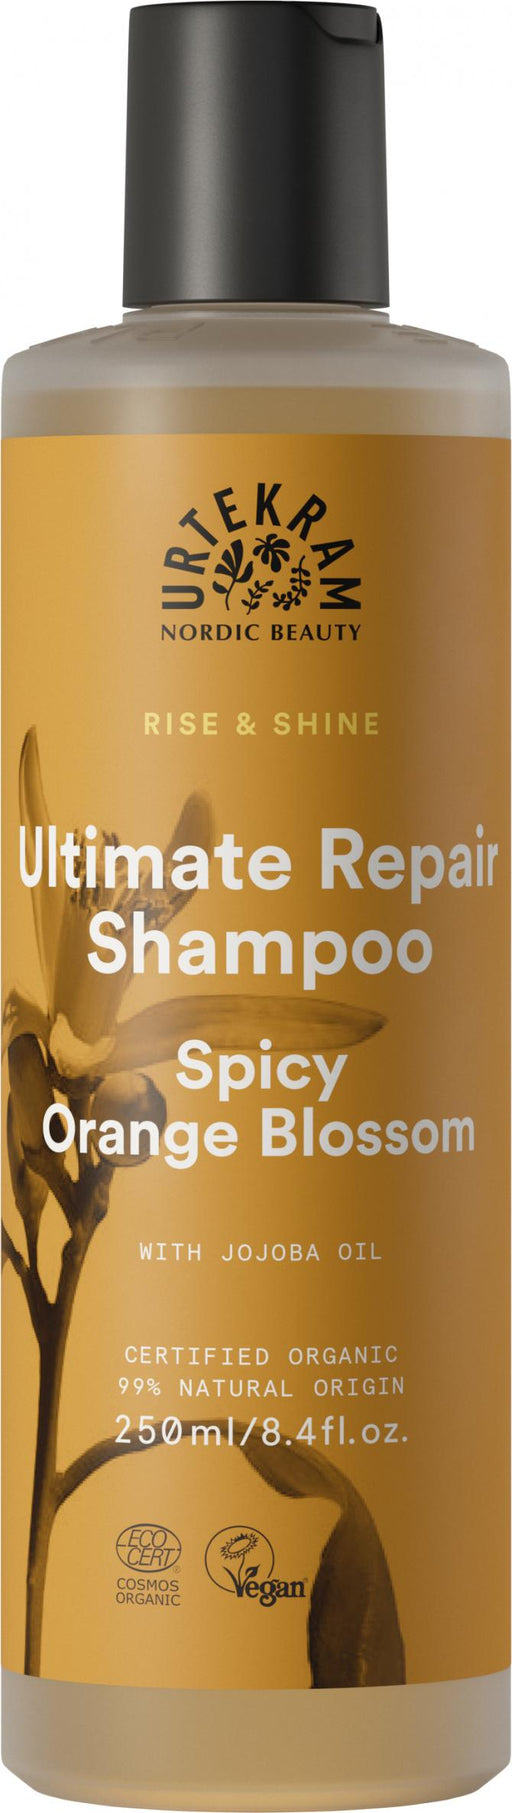 Urtekram Ultimate Repair Shampoo Spicy Orange Blossom 250ml - Dennis the Chemist